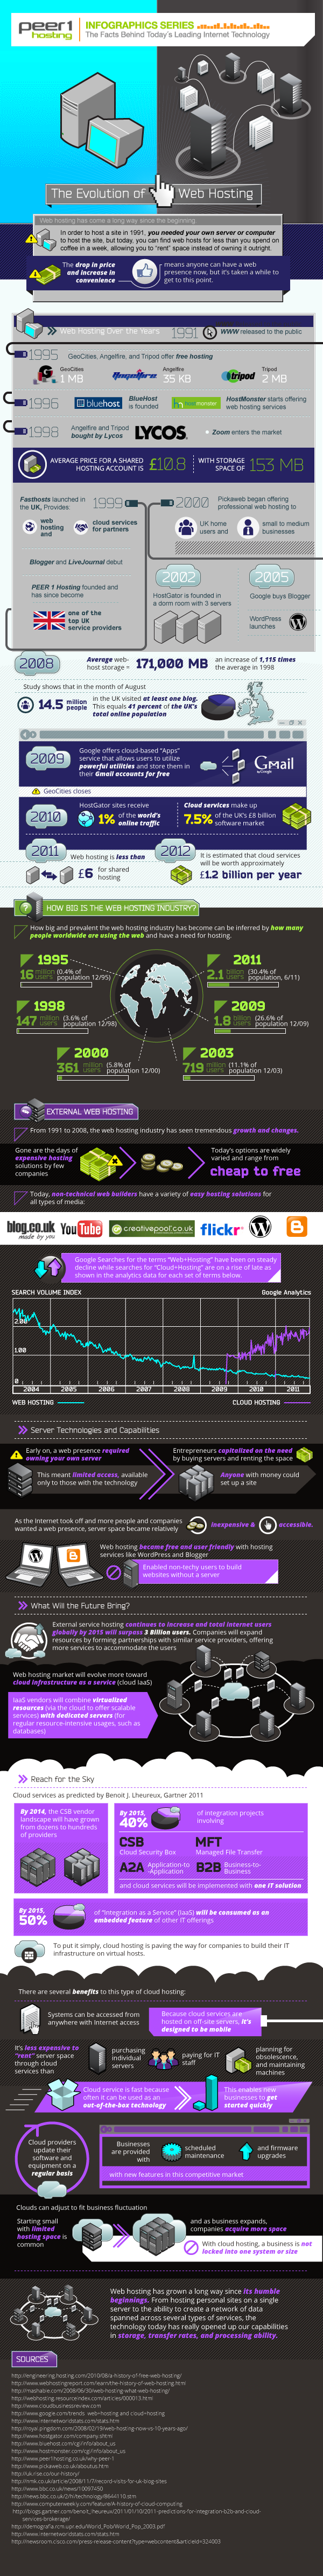 History of Web hosting